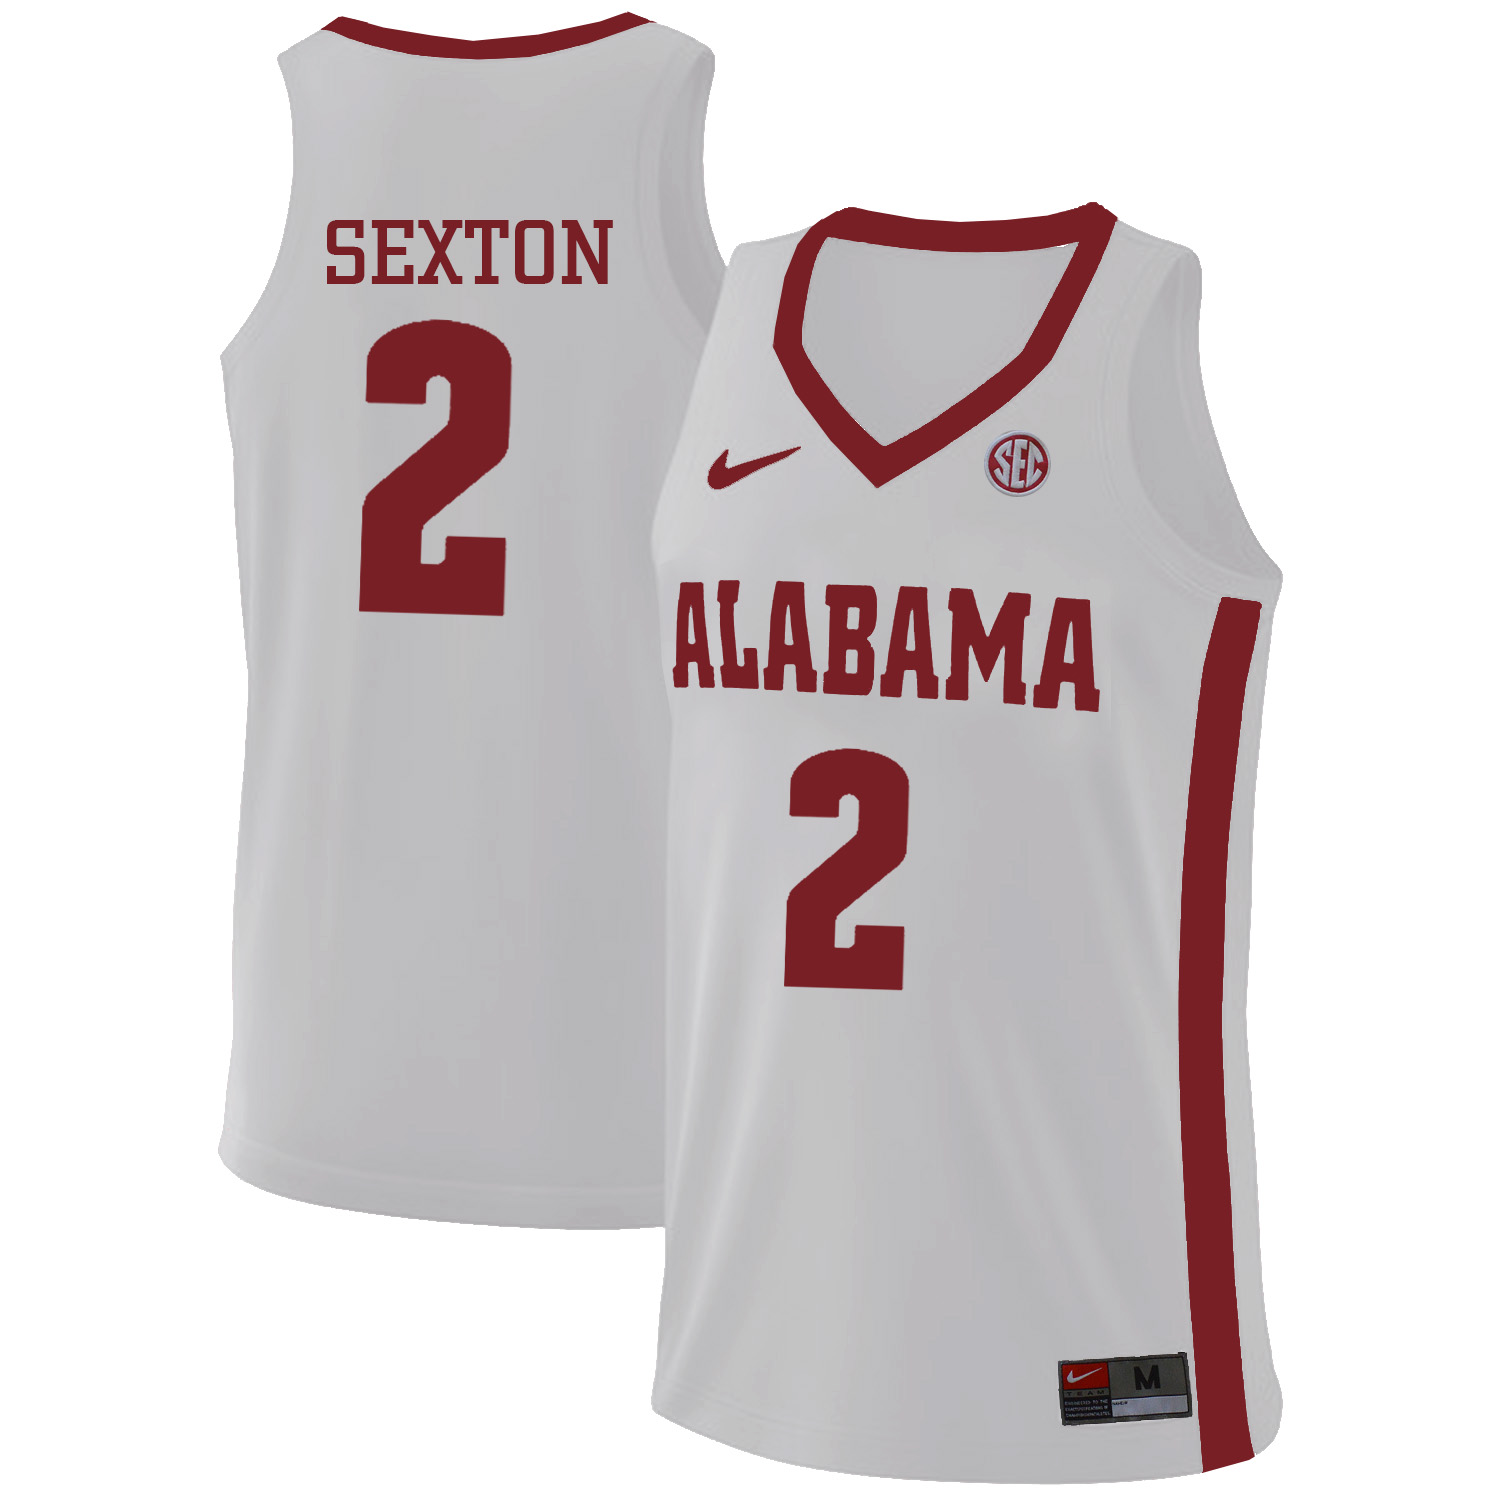 Alabama Crimson Tide 2 Collin Sexton White College Basketball Jersey